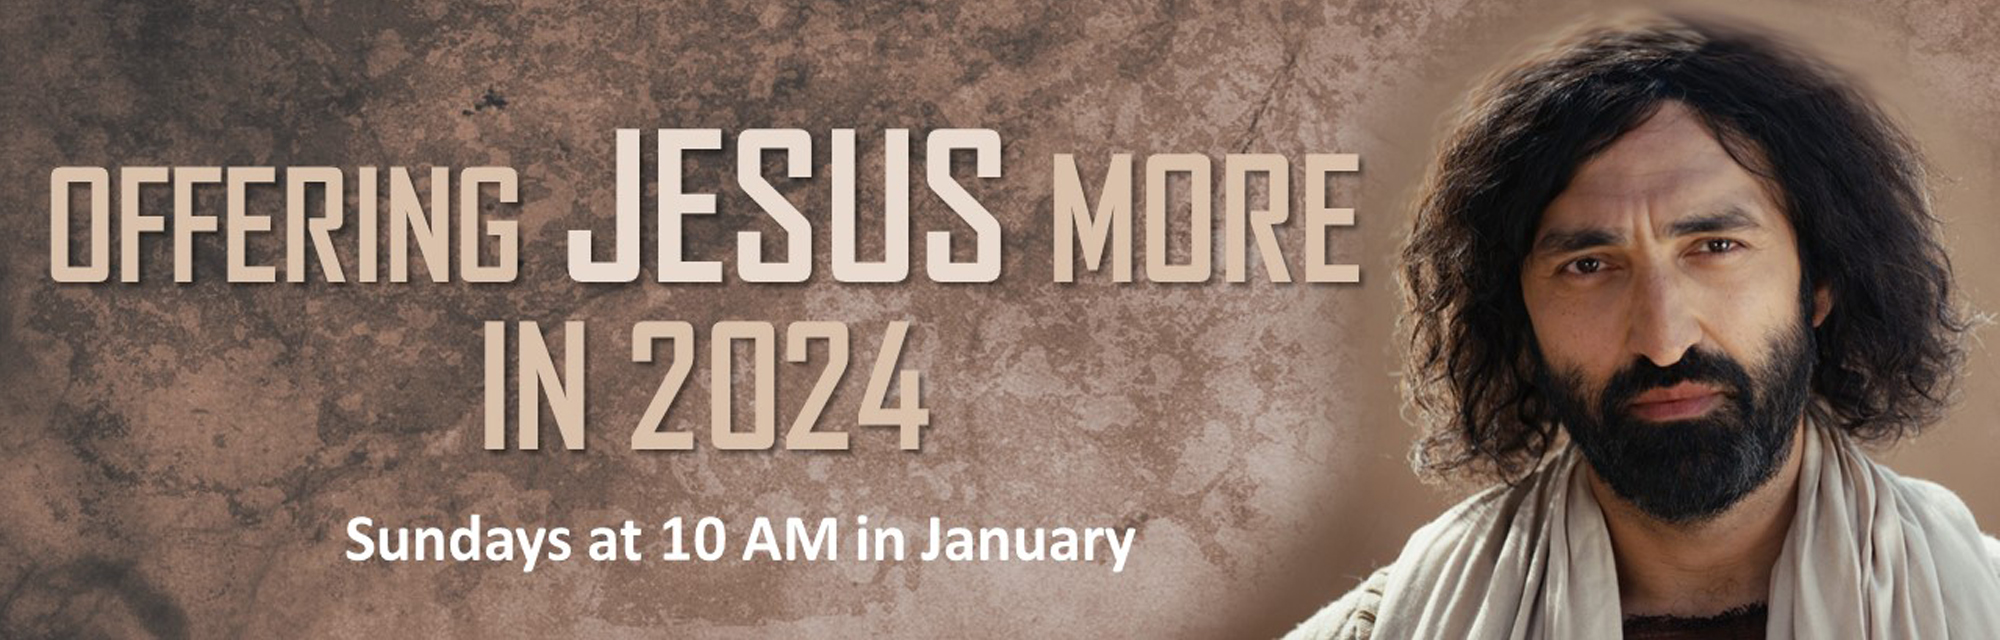 Offering Jesus More in 2024!